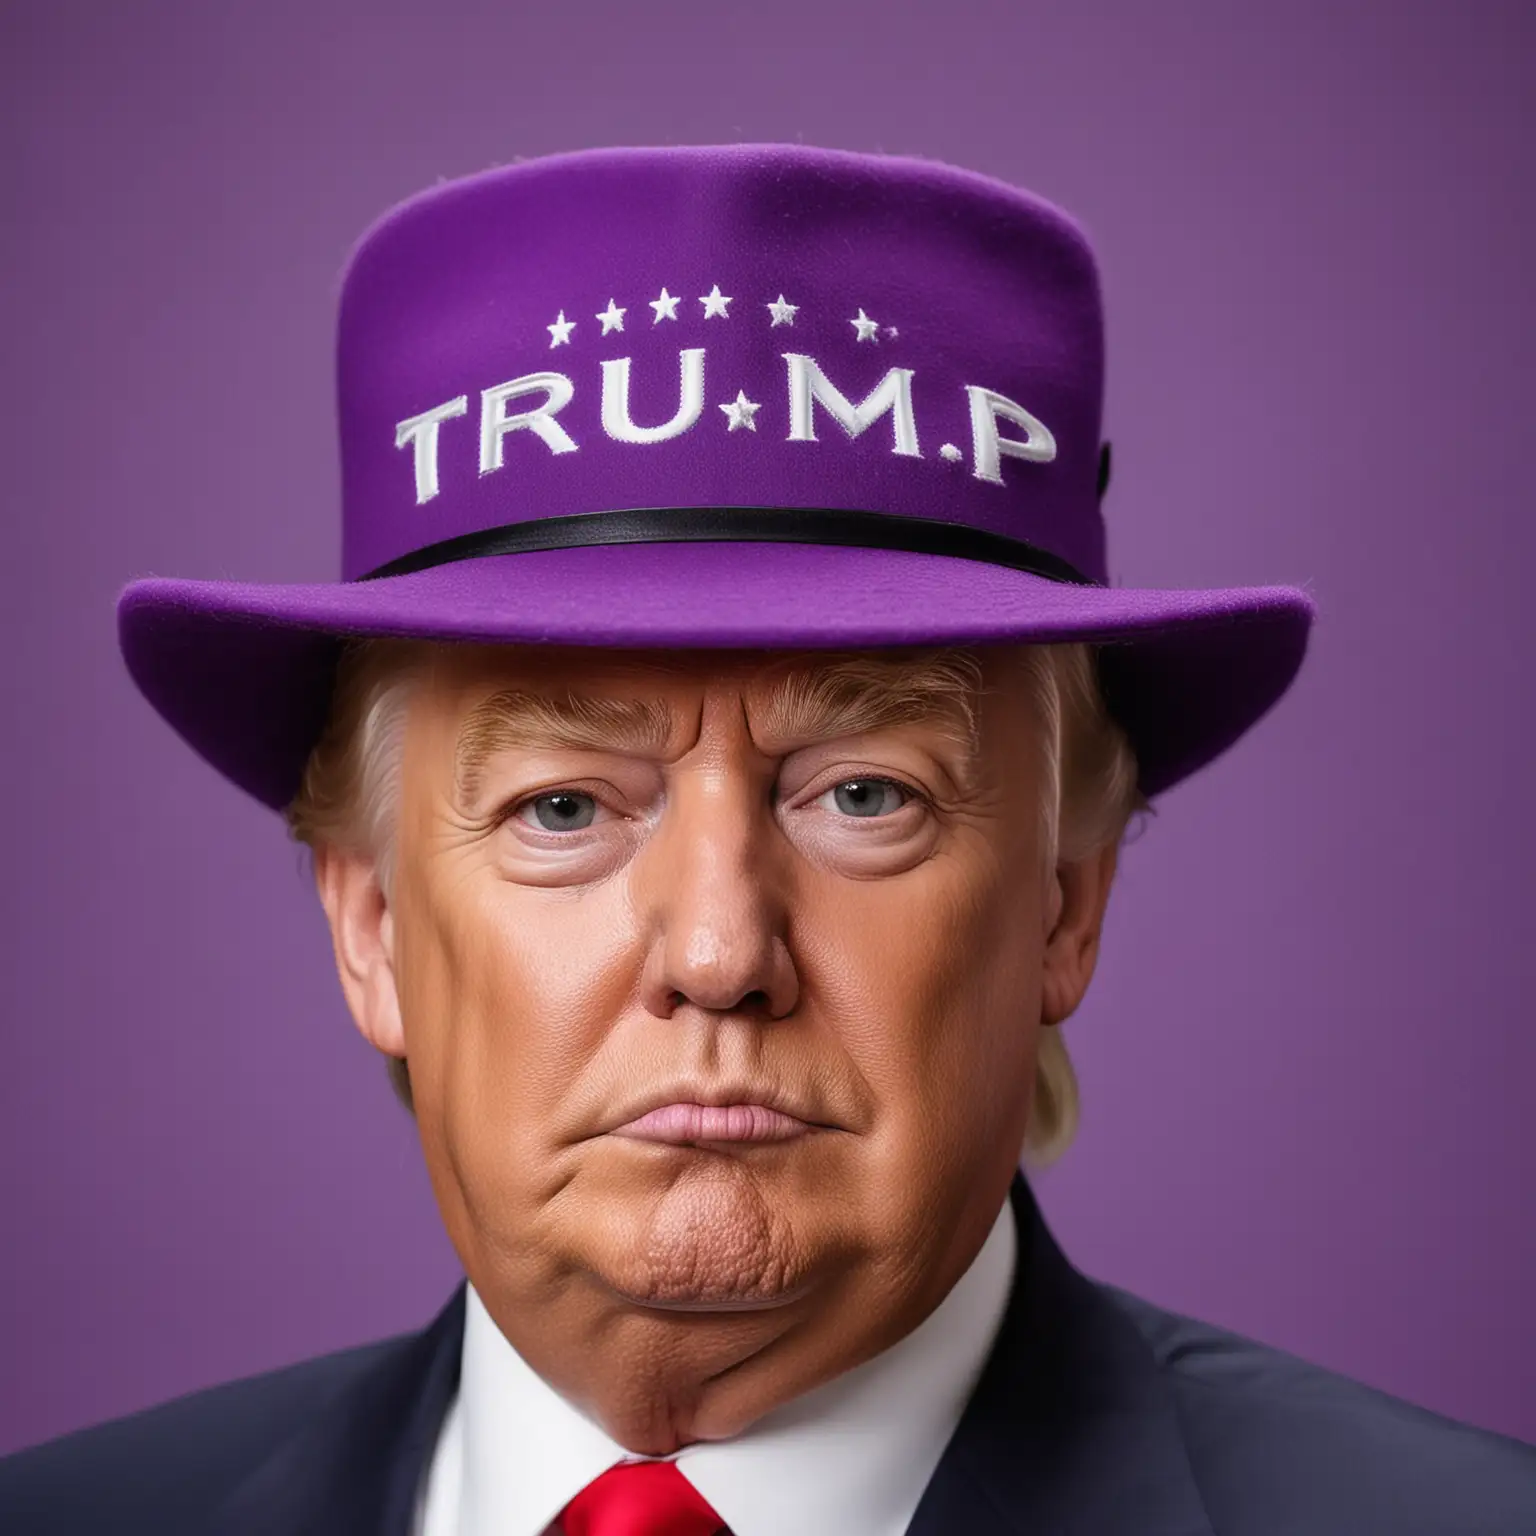 Trump with hat purple

